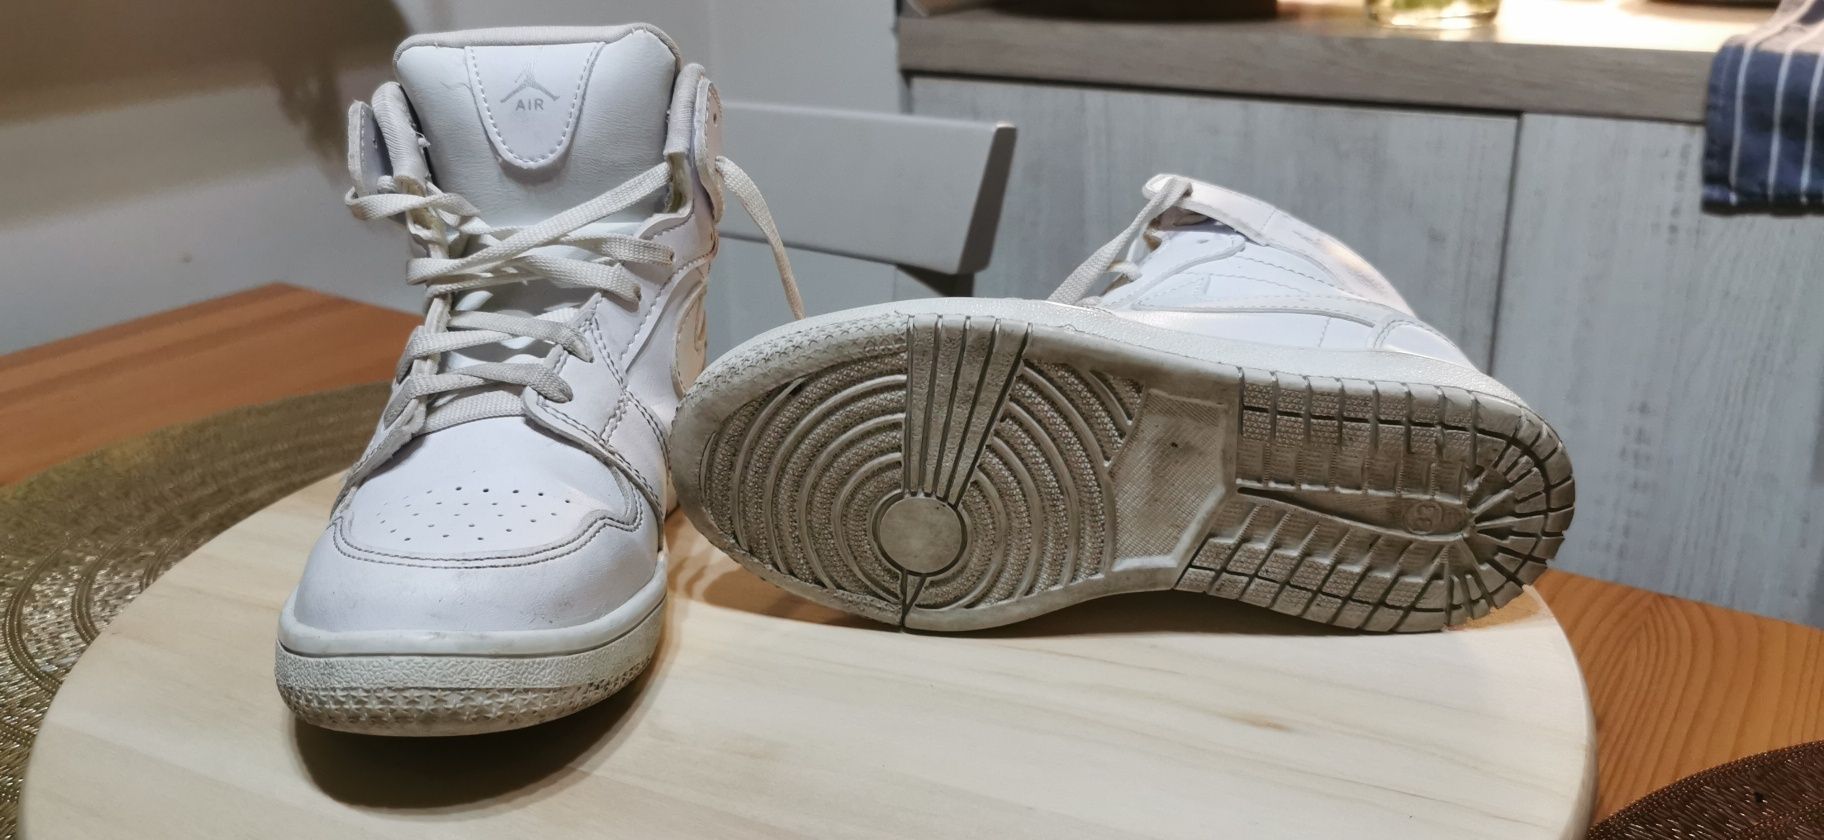 Buty Nike Air Jordan 1 białe r. 33